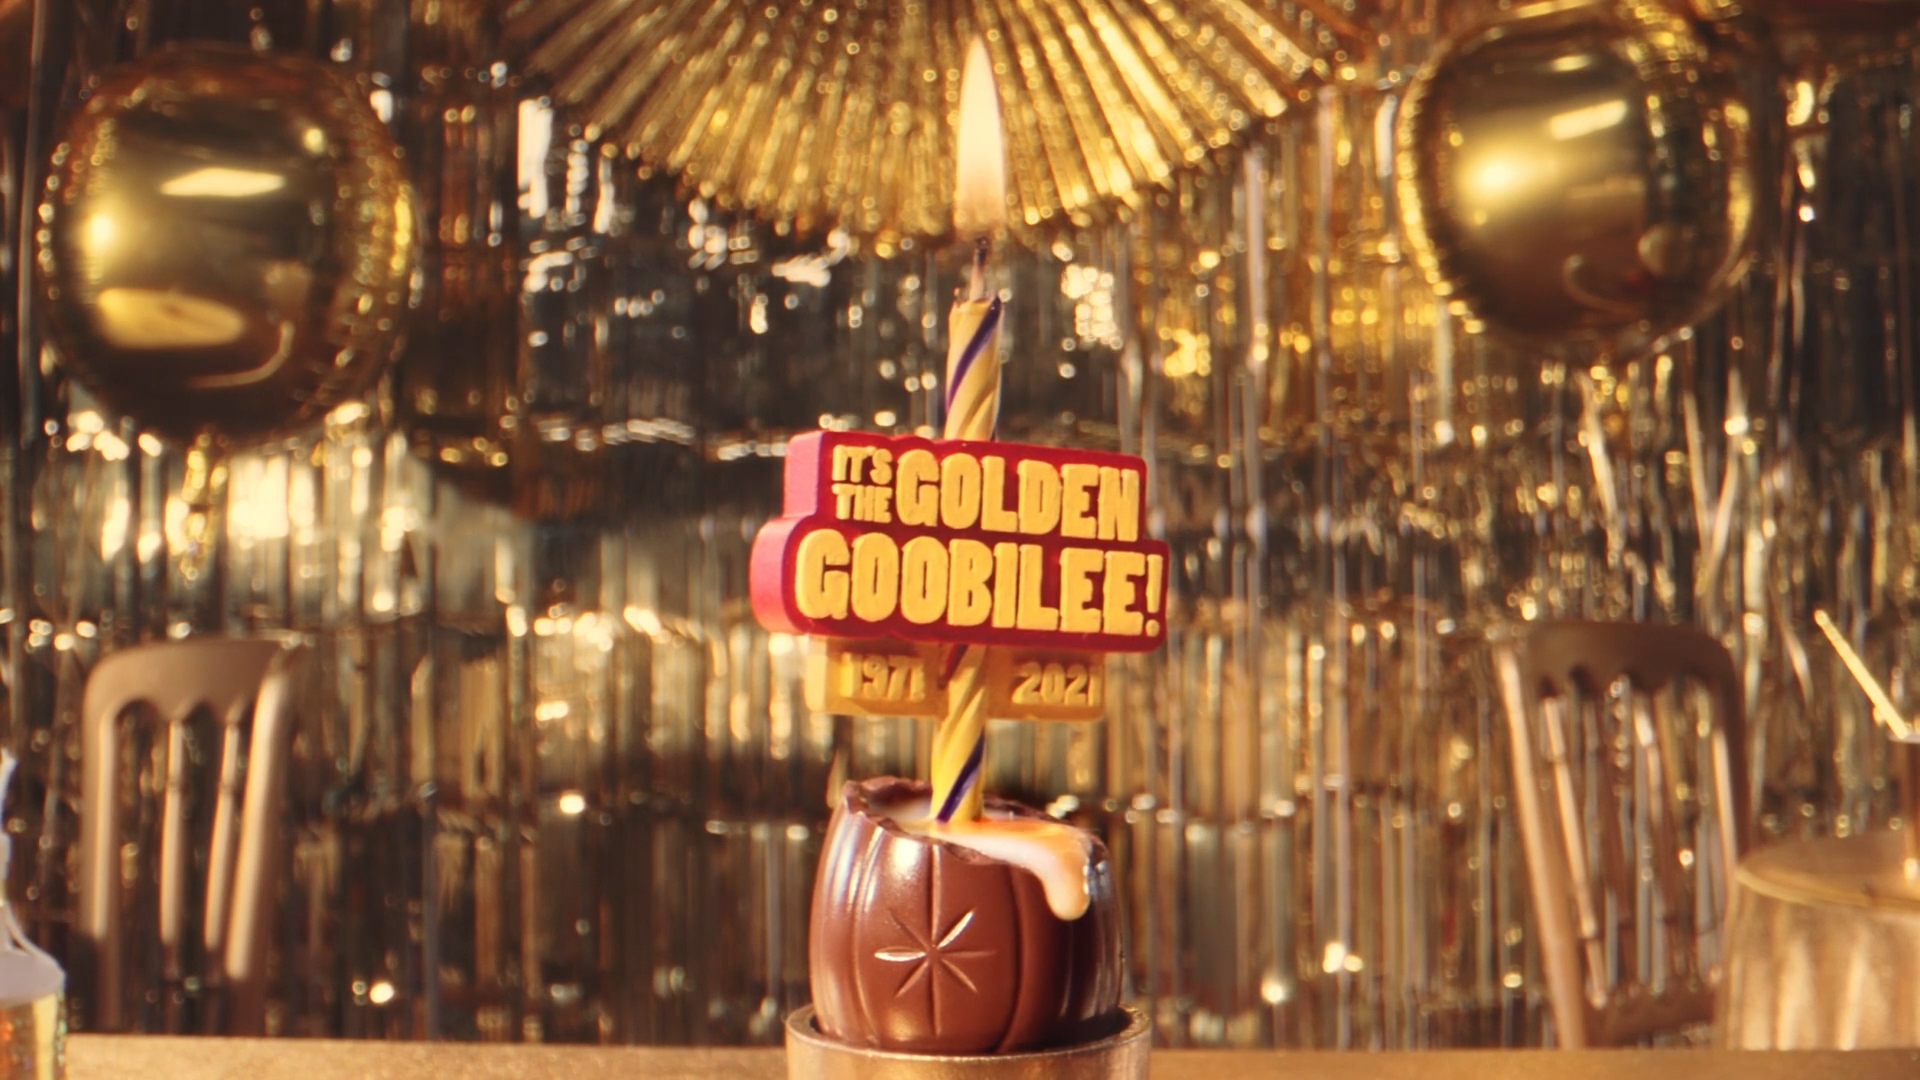 Cadbury Creme Egg unveils 50th birthday Golden Goobilee